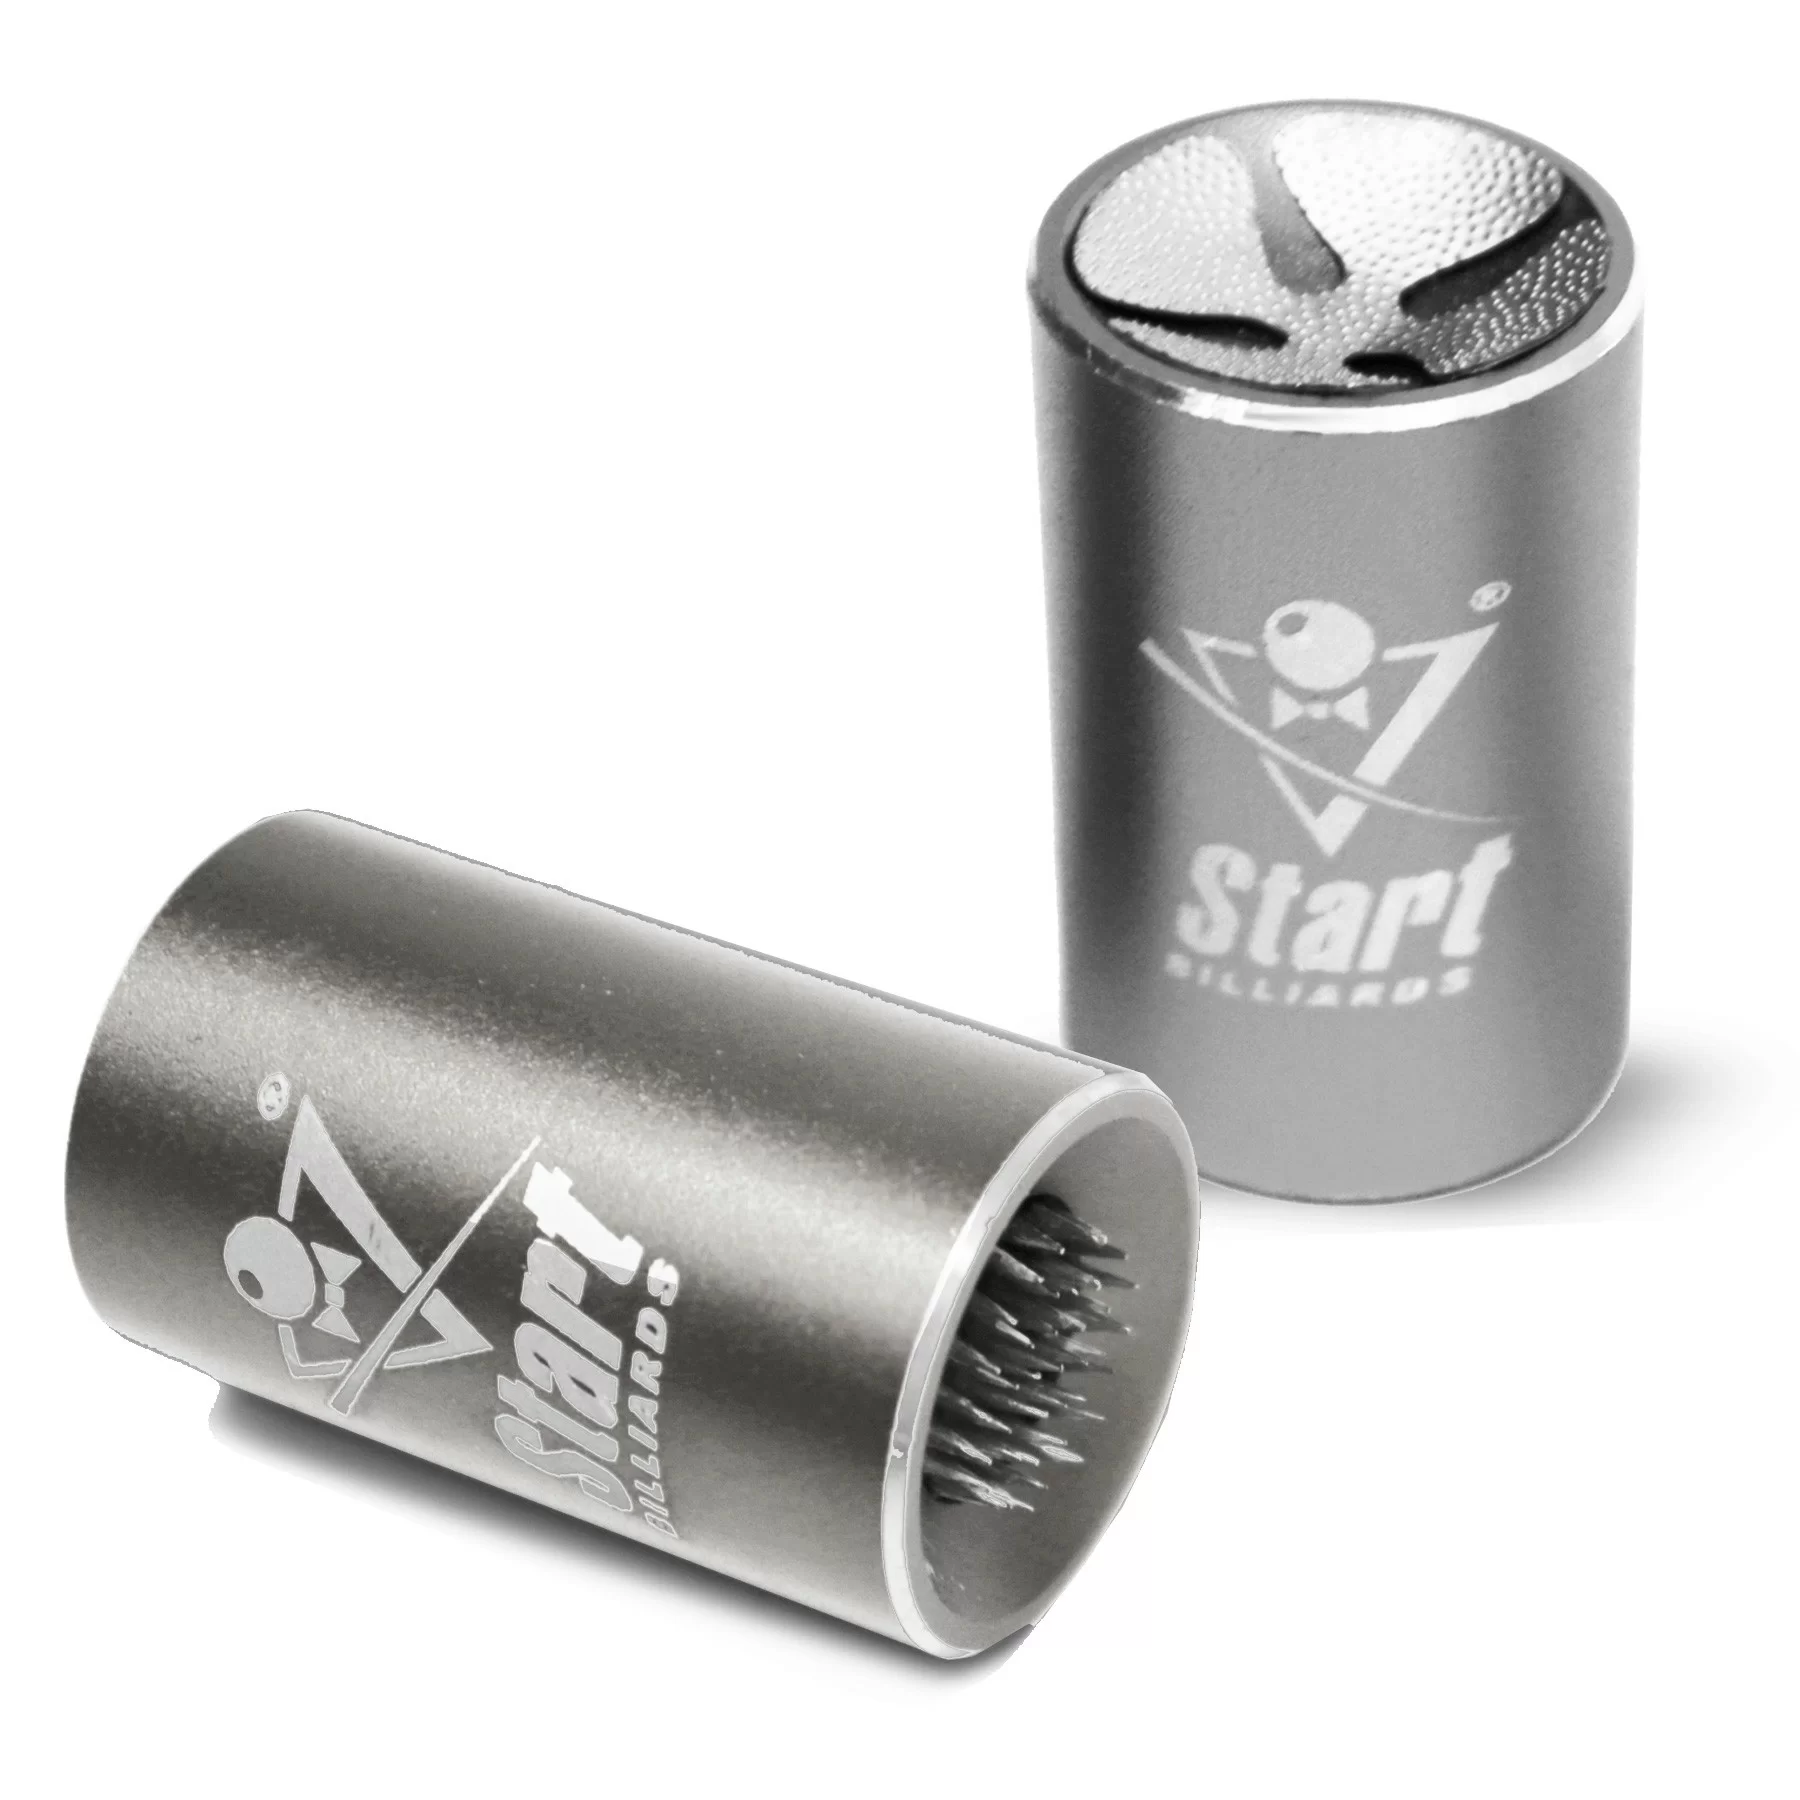 Фото Инструмент Startbilliards Galaxy серебро для перфорации наклейки SB144 со склада магазина СпортСЕ